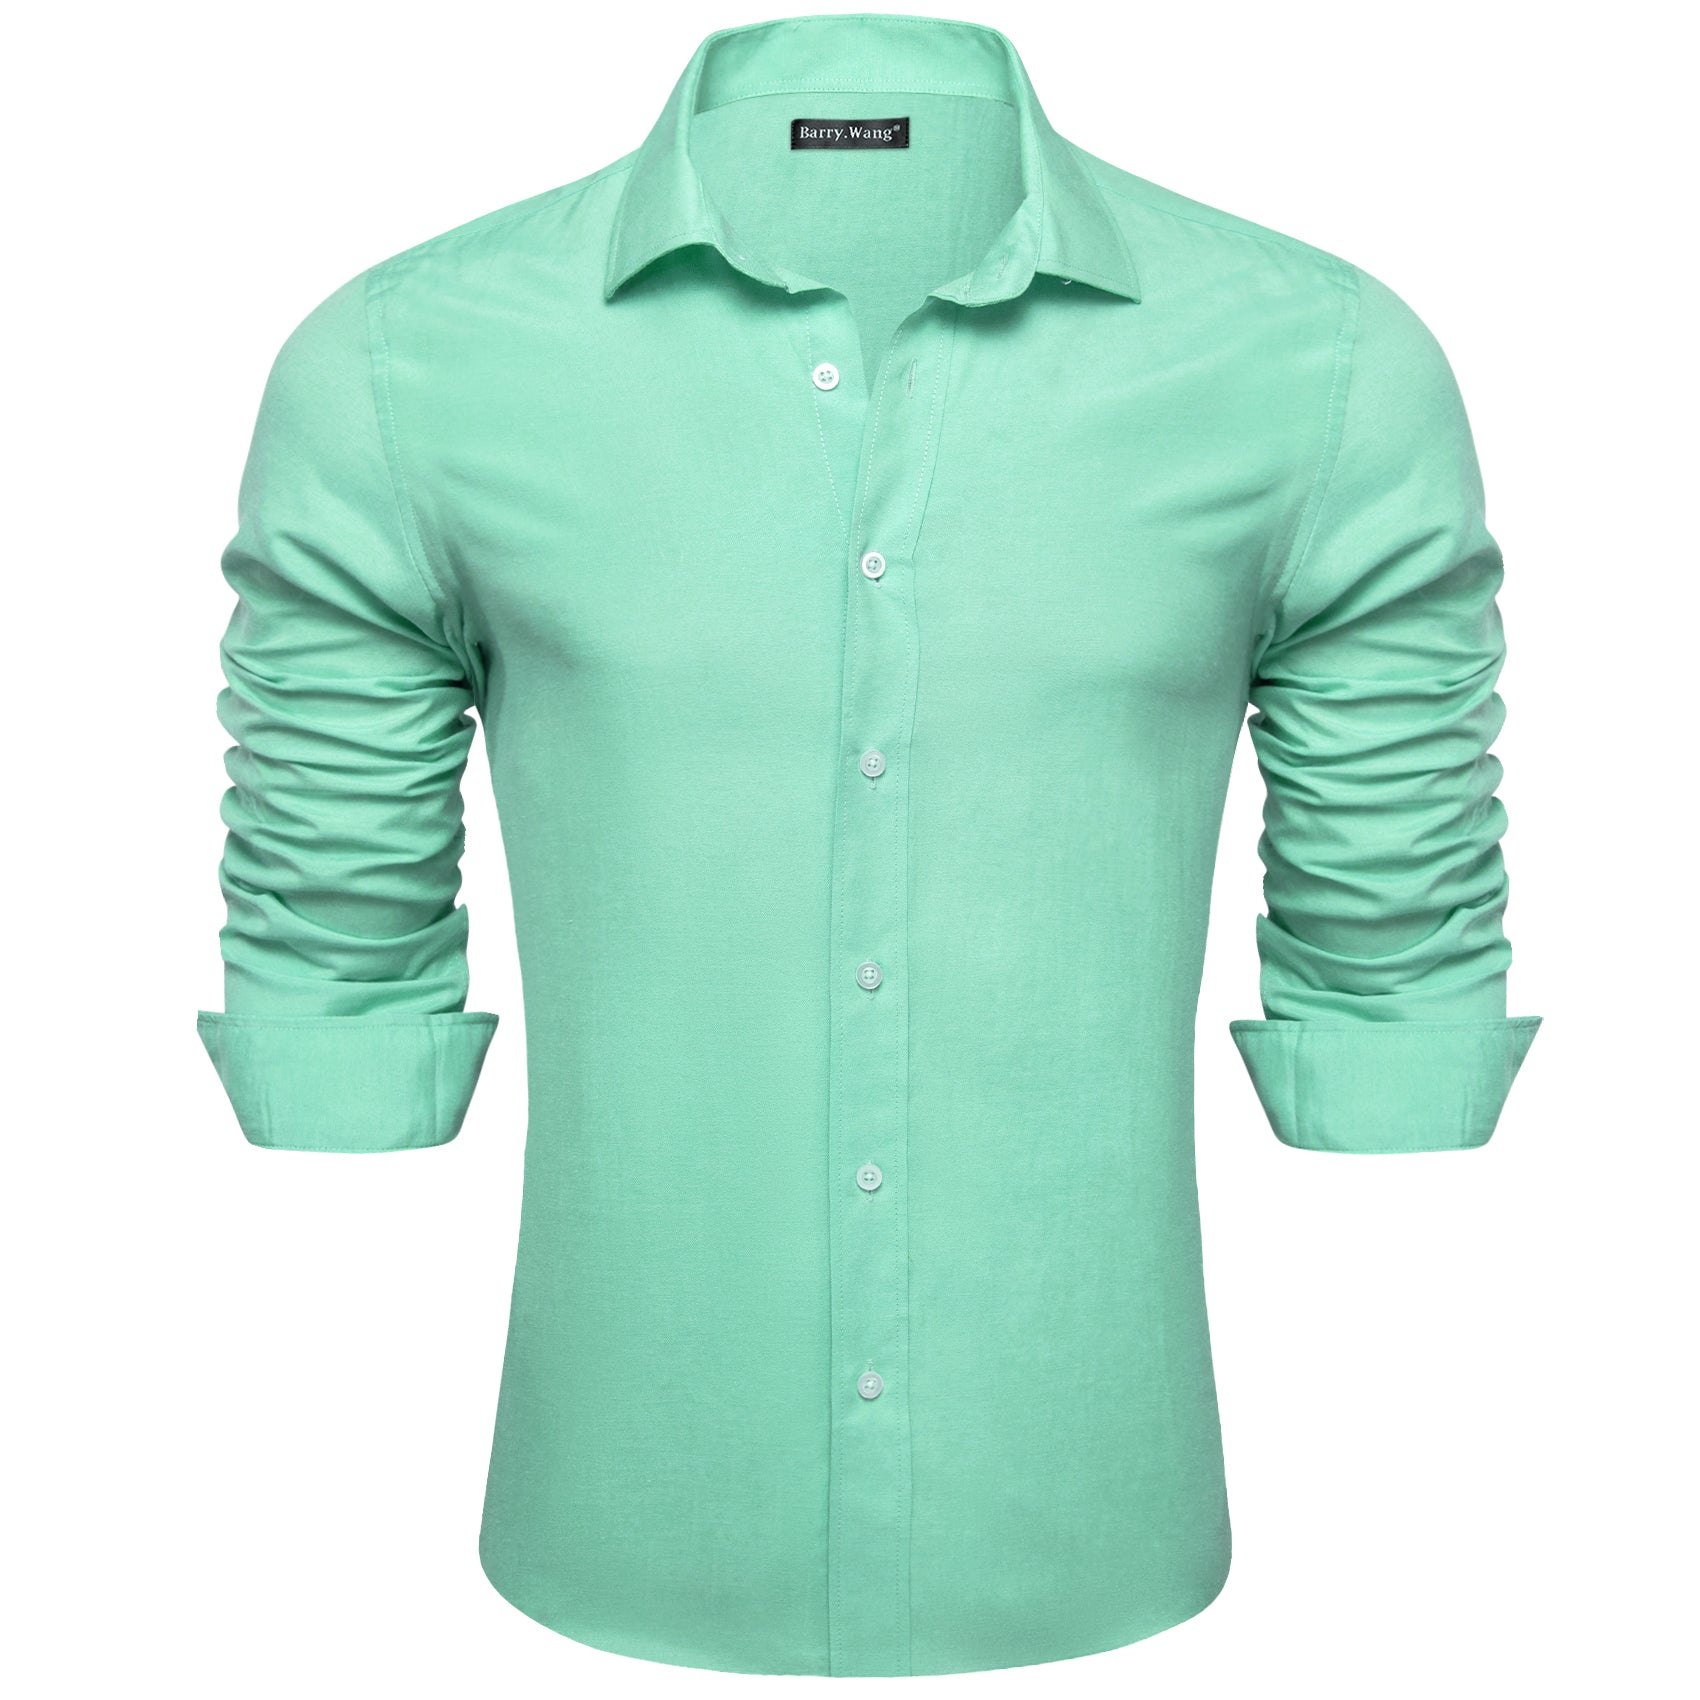 Barry.wang Button Down Shirt Turquoise Green Solid Men's Silk Shirt